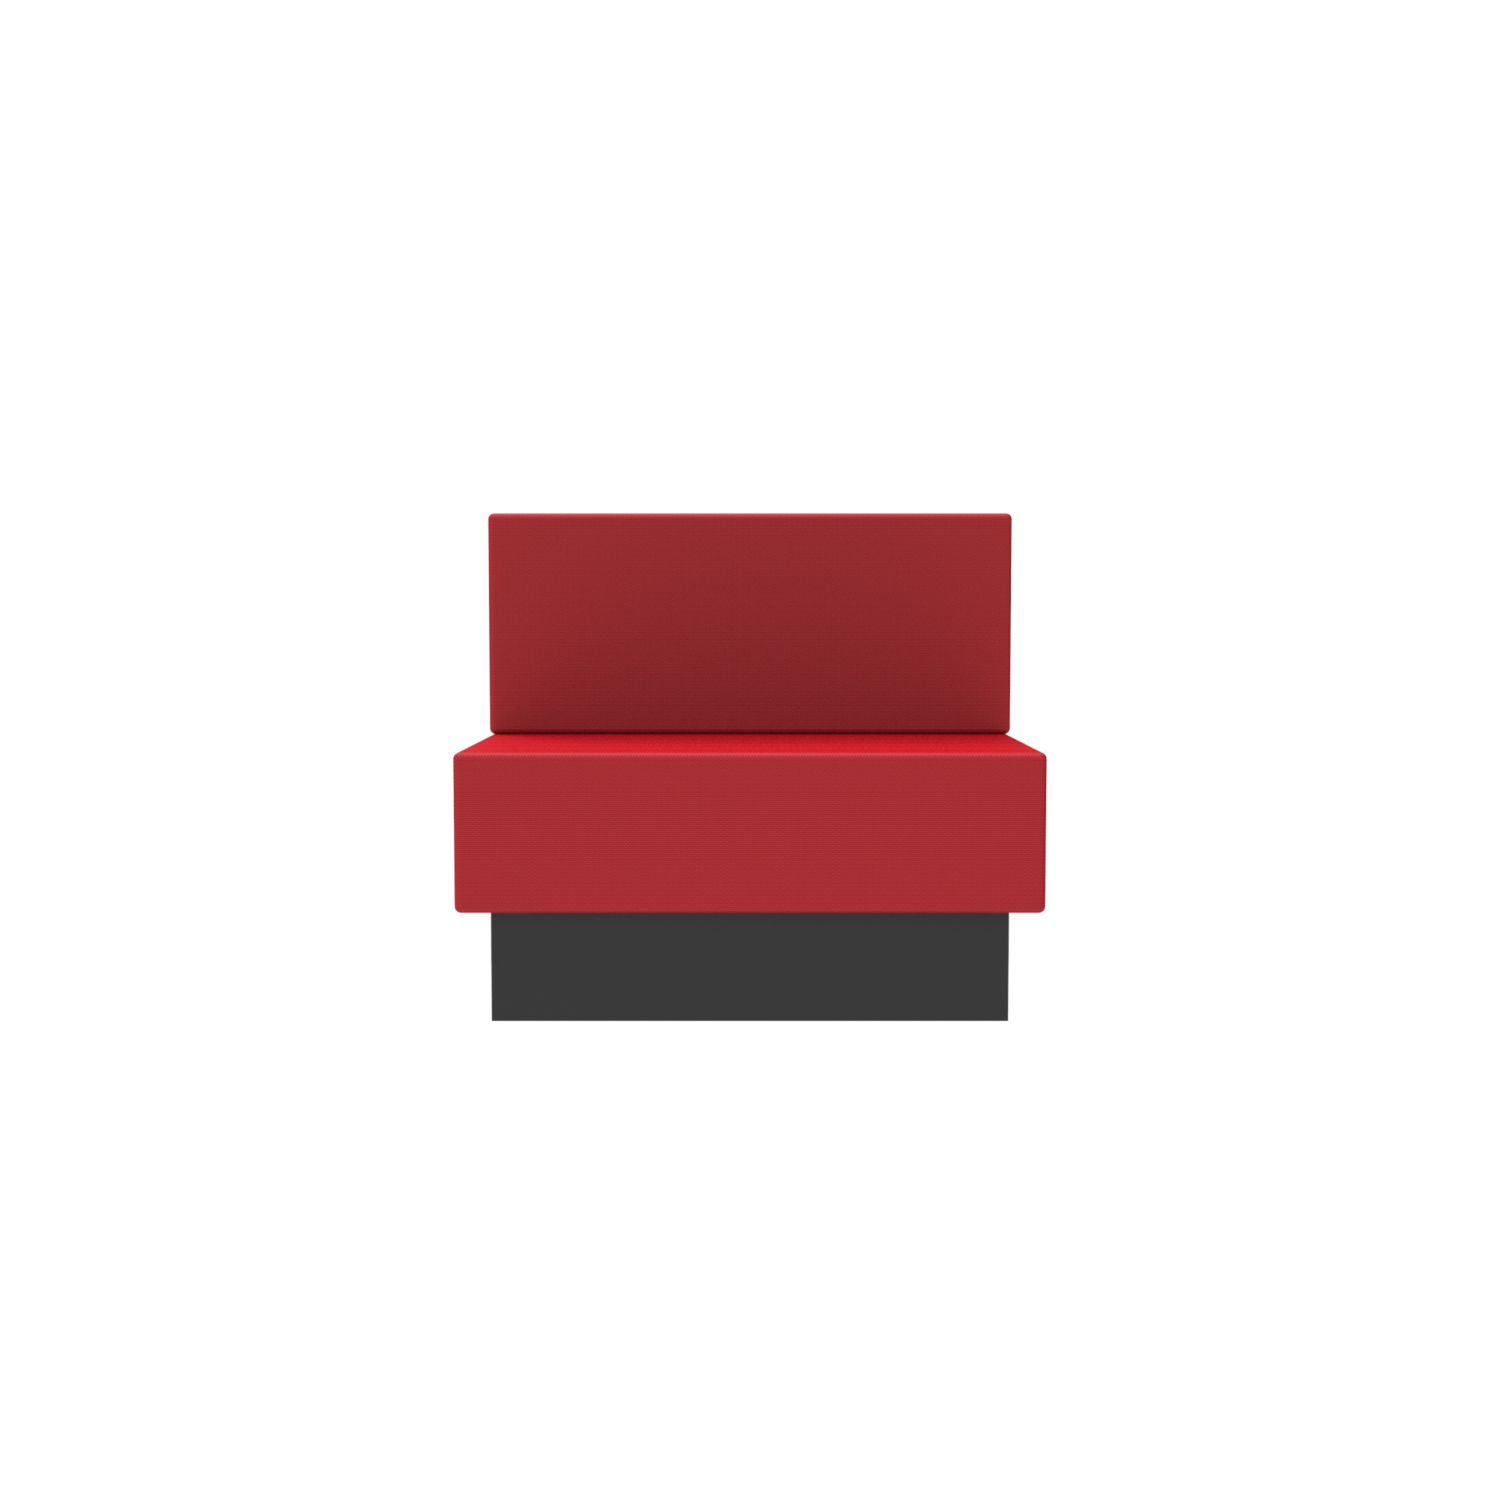 lensvelt oma blocks relaxing edition closed base with backrest full length 90 cm width grenada red 010 black ral9005 hard leg ends